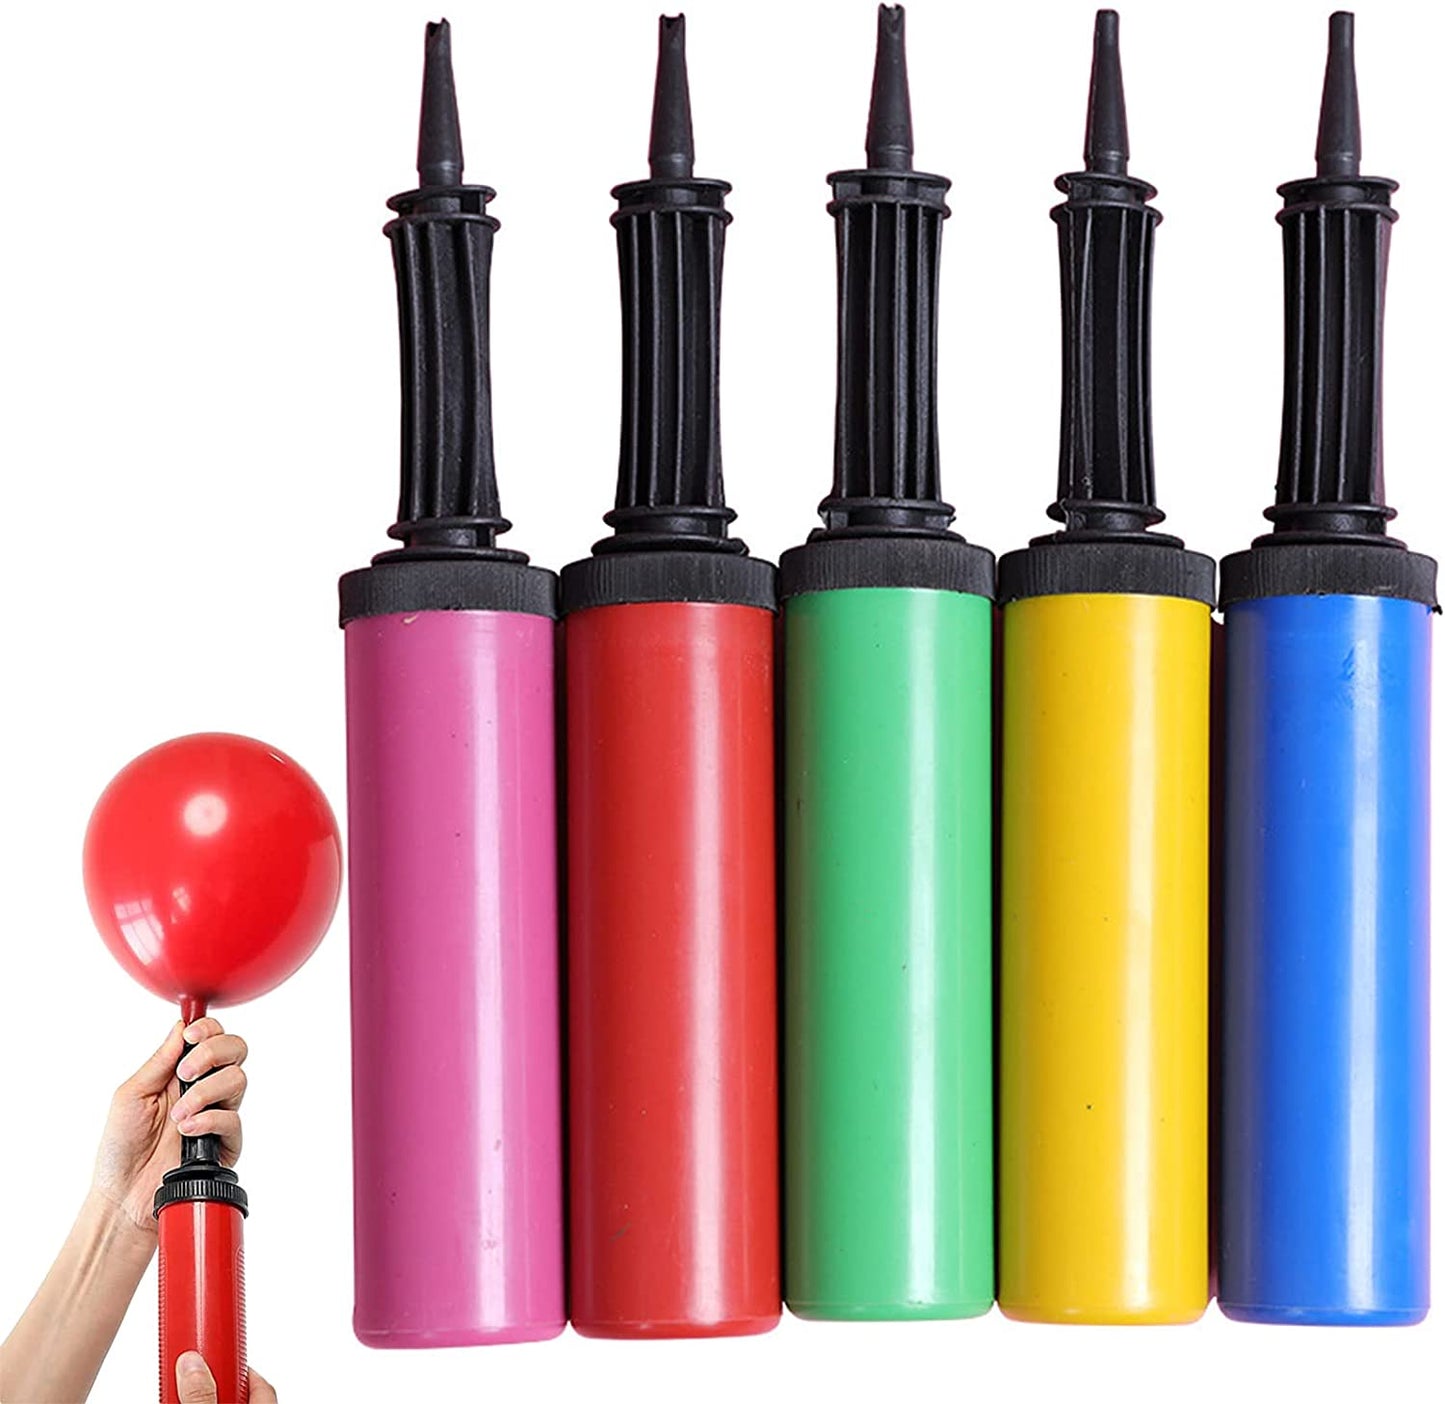 Manual Balloon Pump Hand Held Plastic Balloon Pump Party Birthday Balloons Accessories Inflator Hand Push Air Pumps